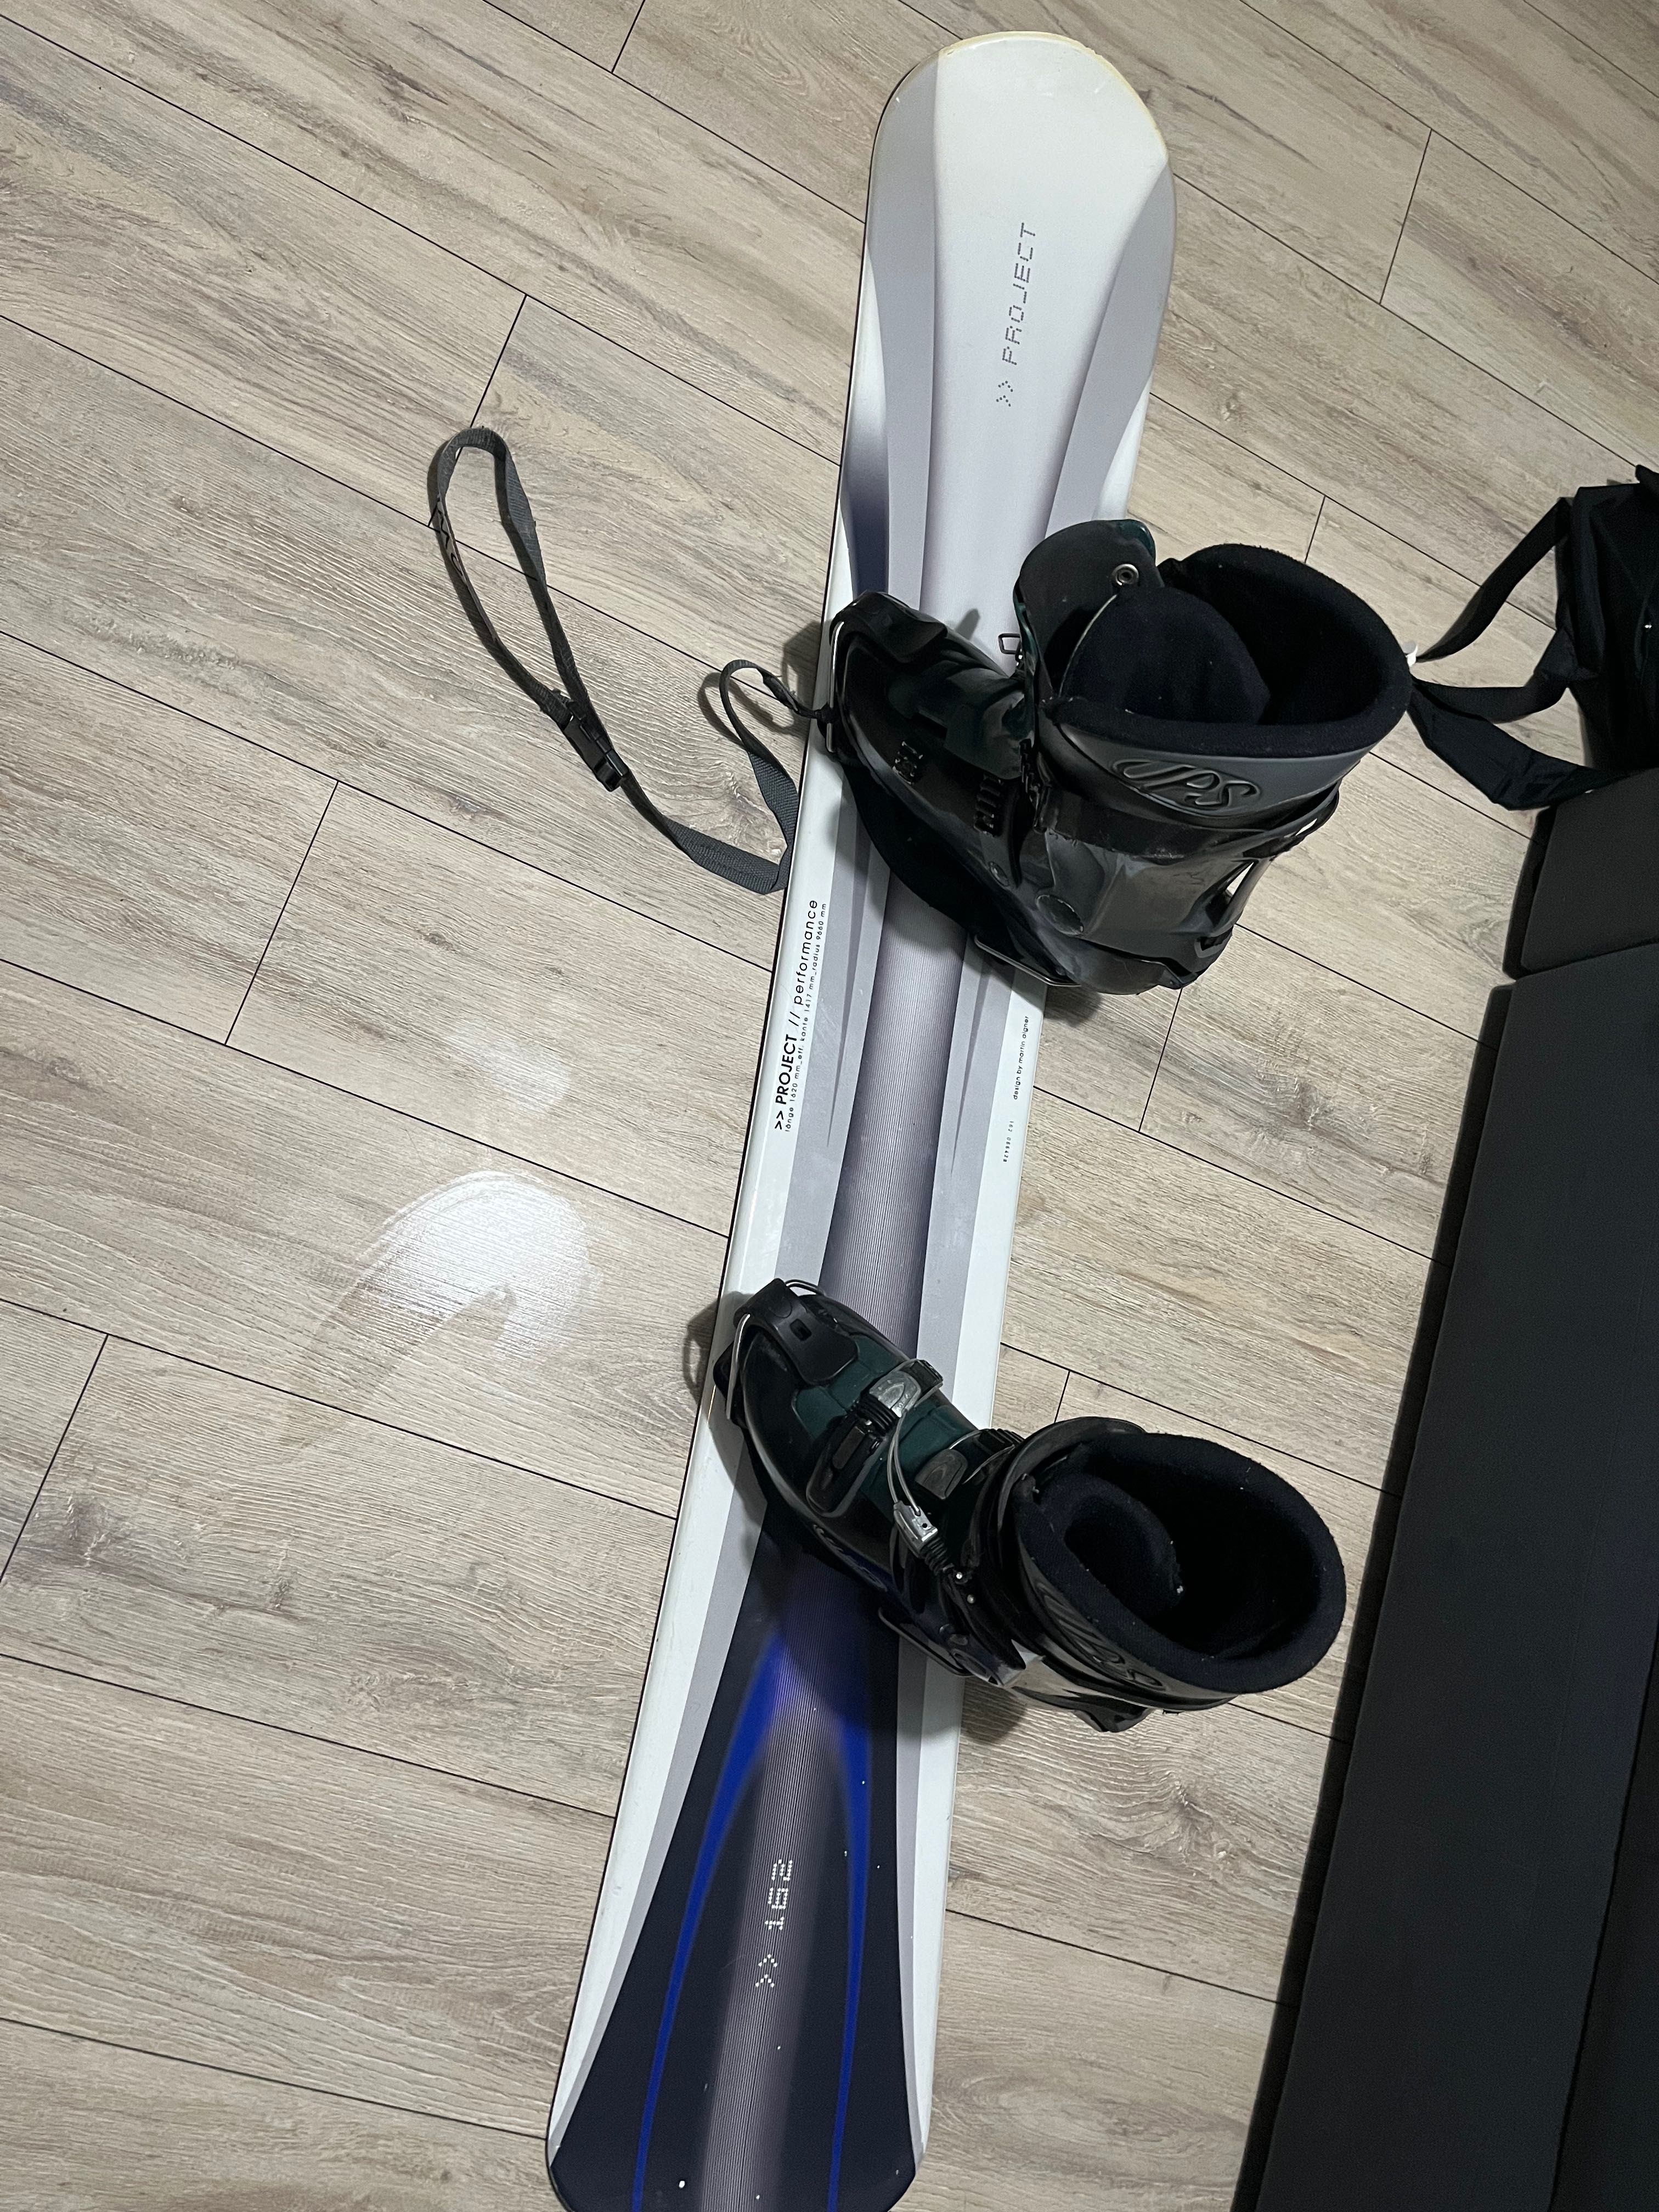 Deska snowboardowa + buty